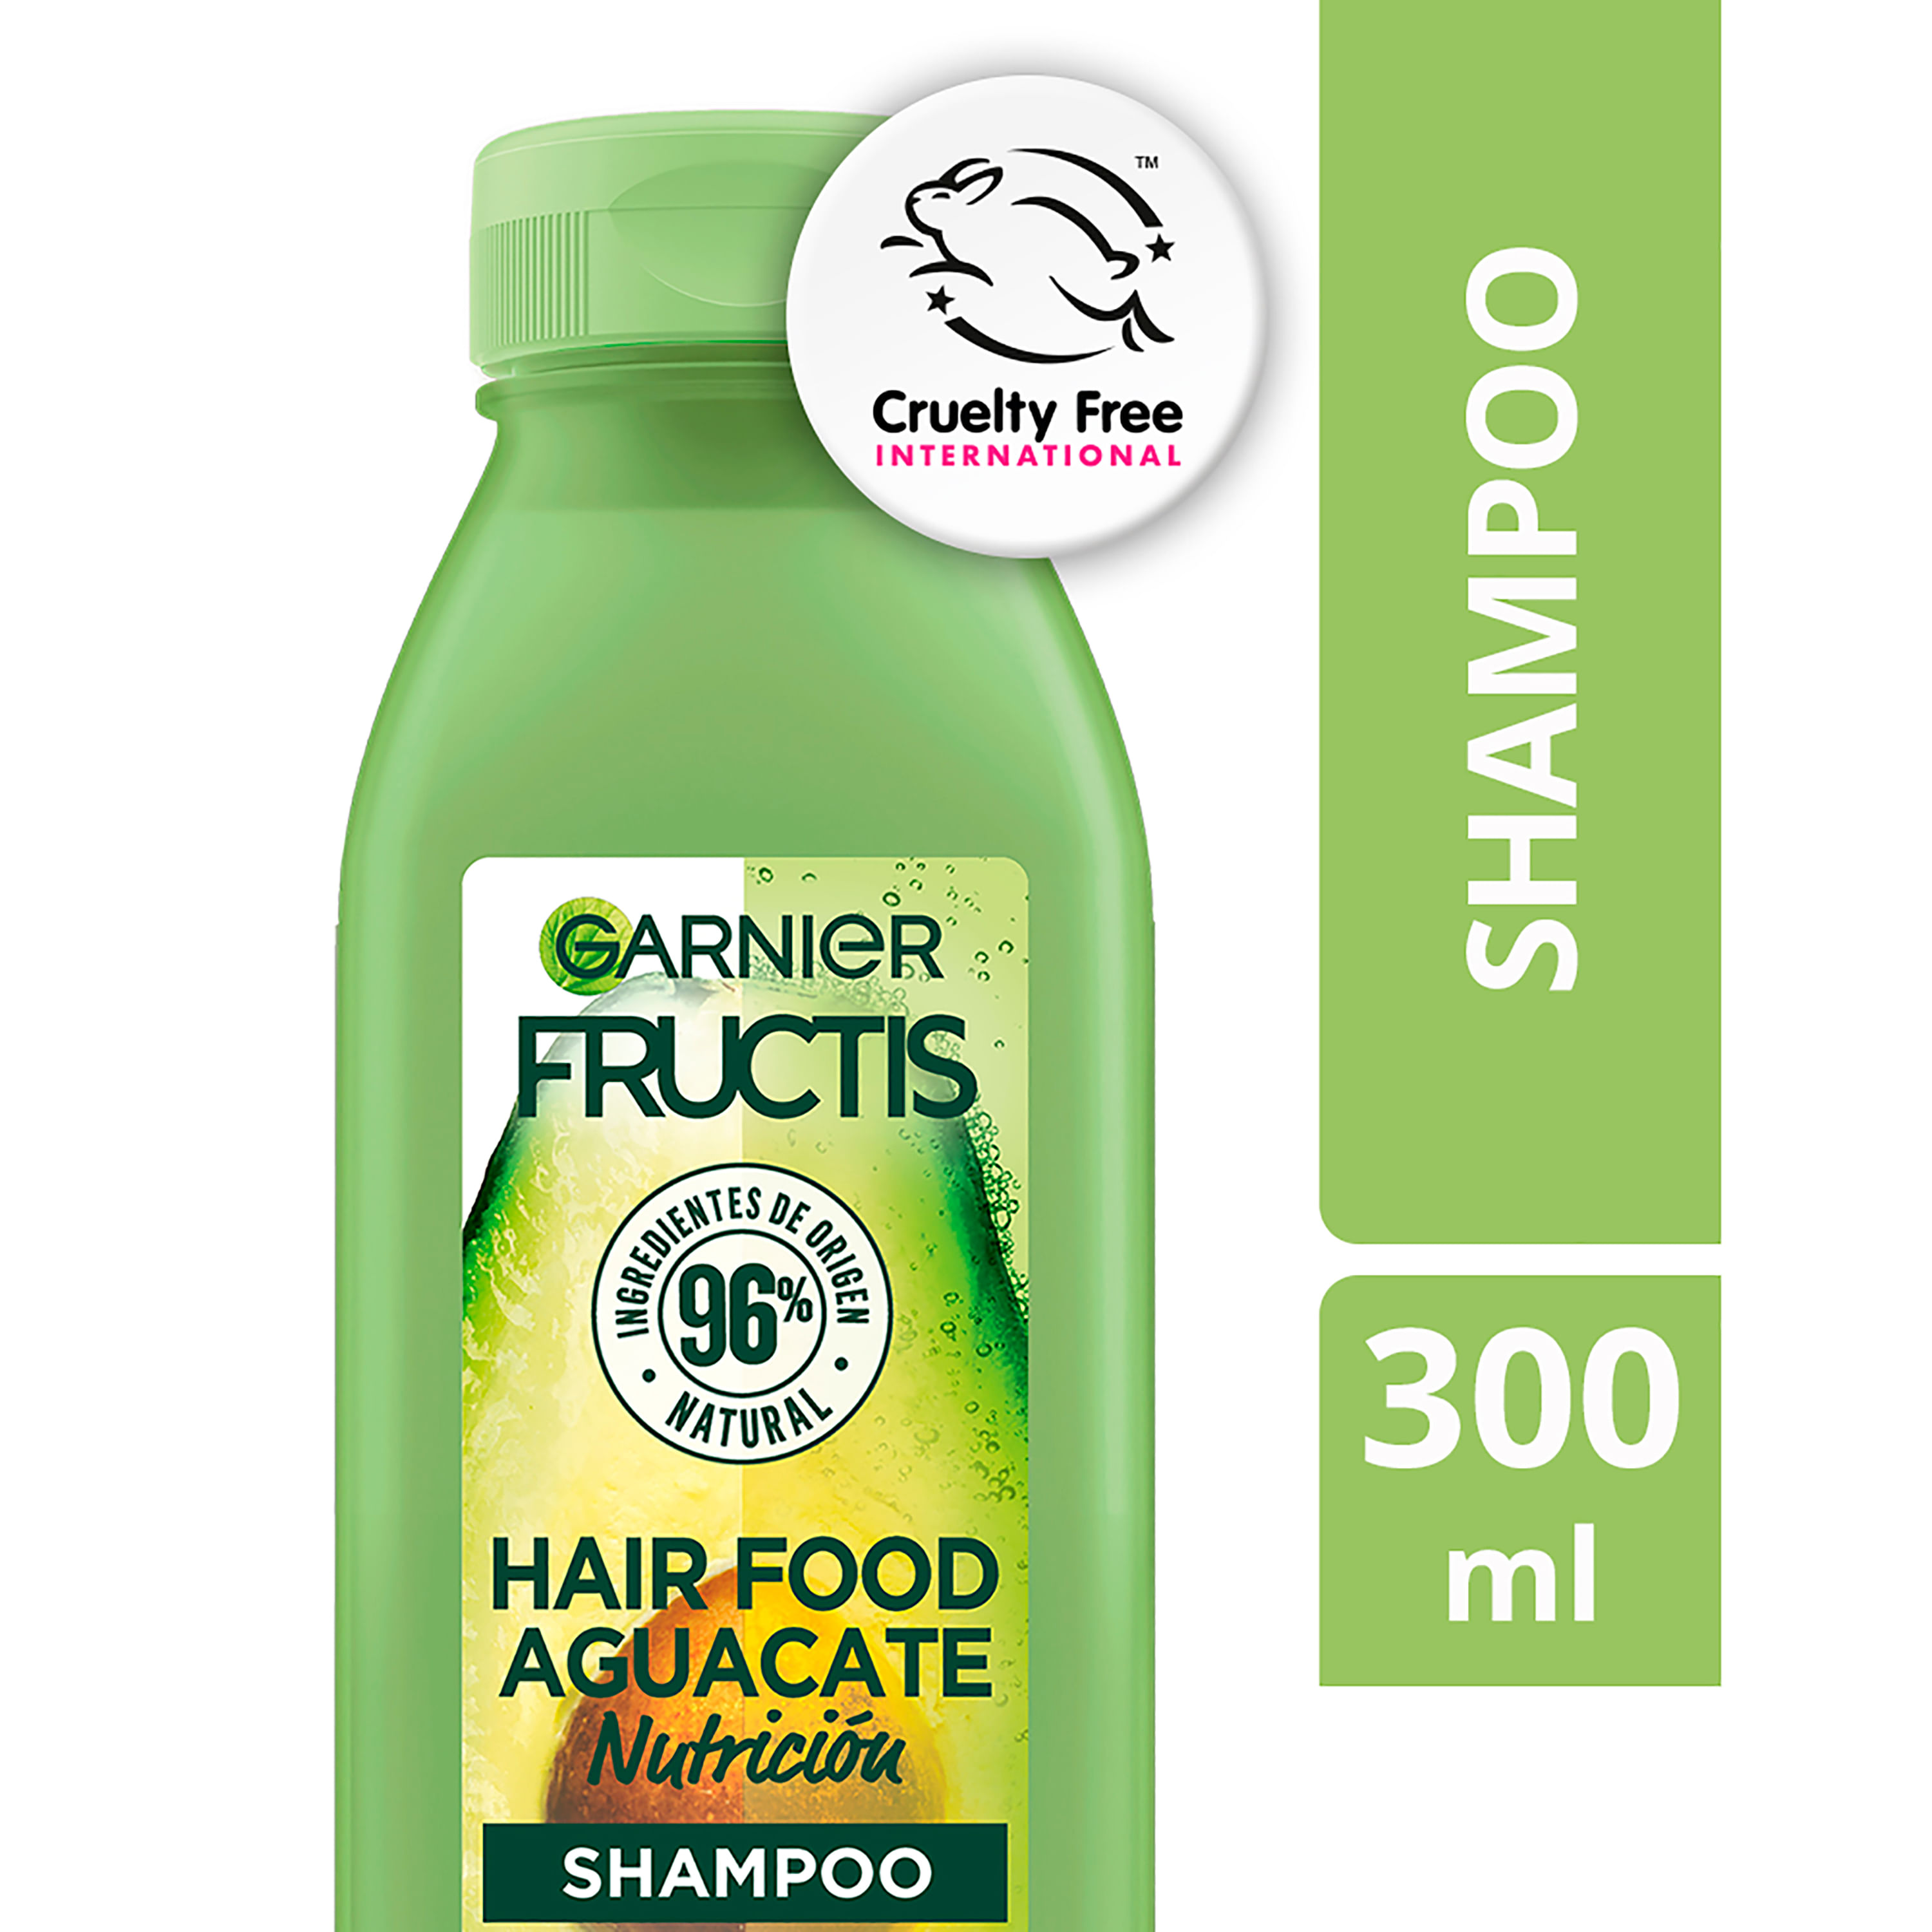 Shampoo-Hair-Food-De-Nutrici-n-Garnier-Fructis-Aguacate-300ml-1-55874